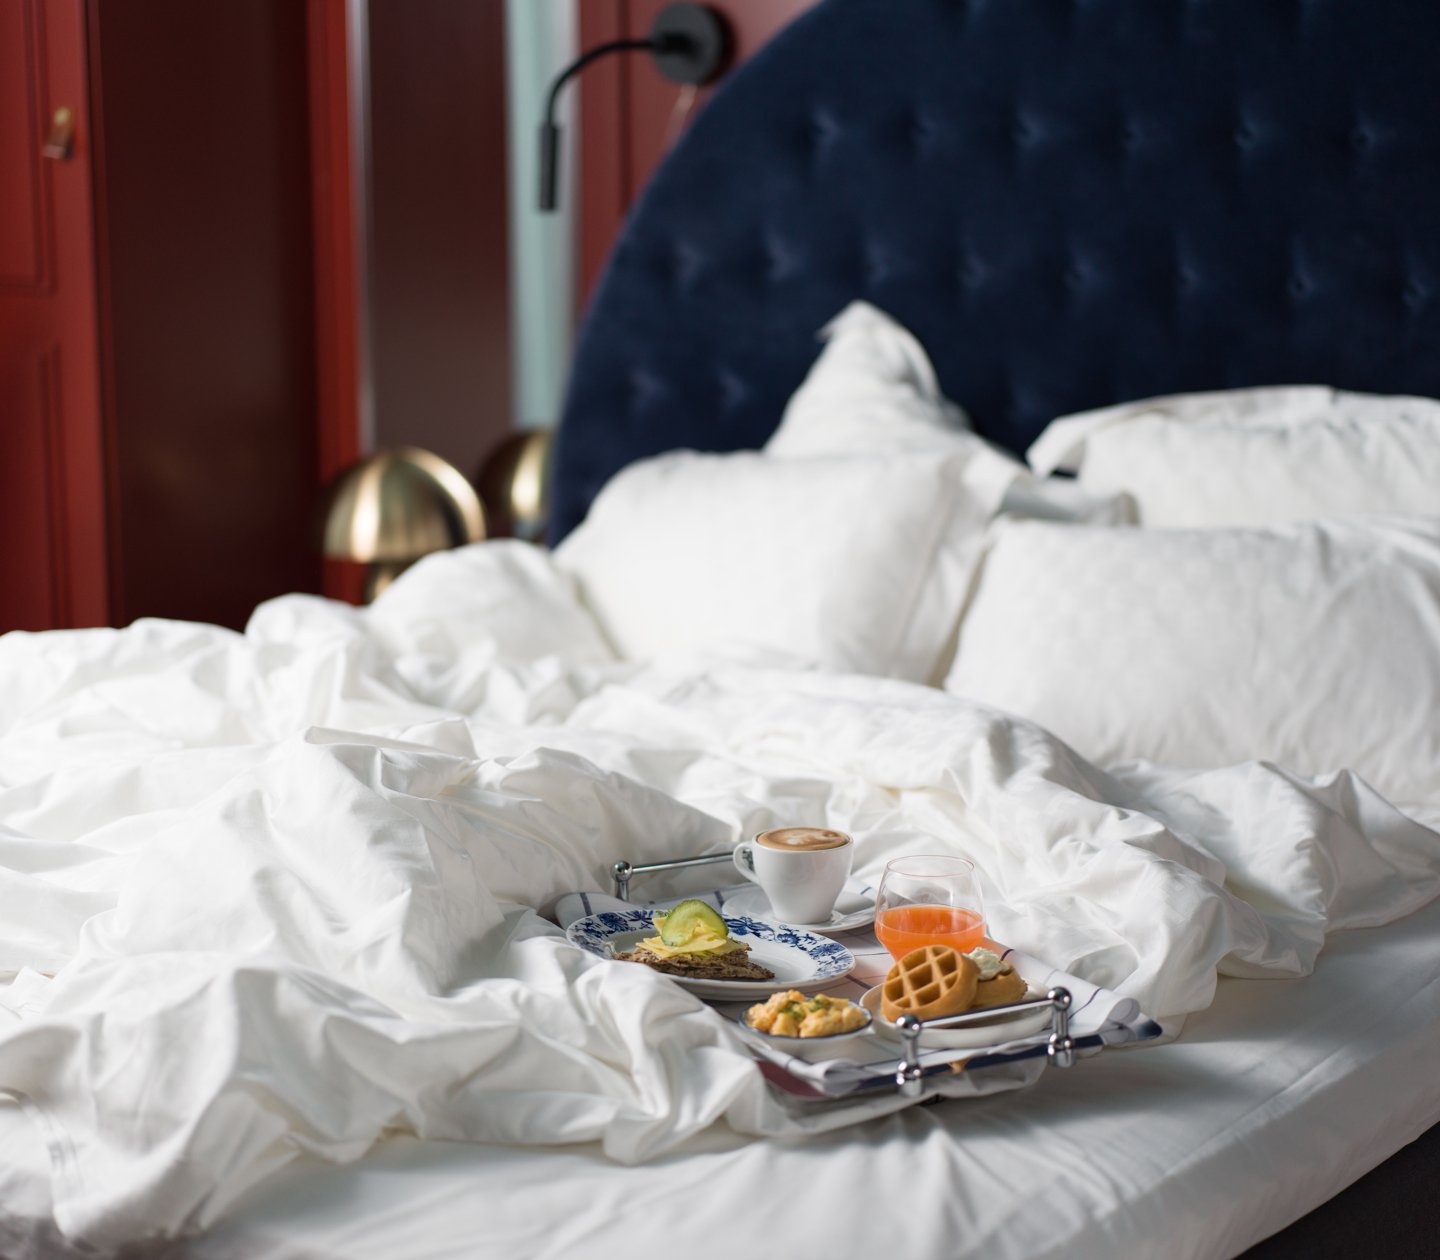 Women in a hotel bed with breakfast tray